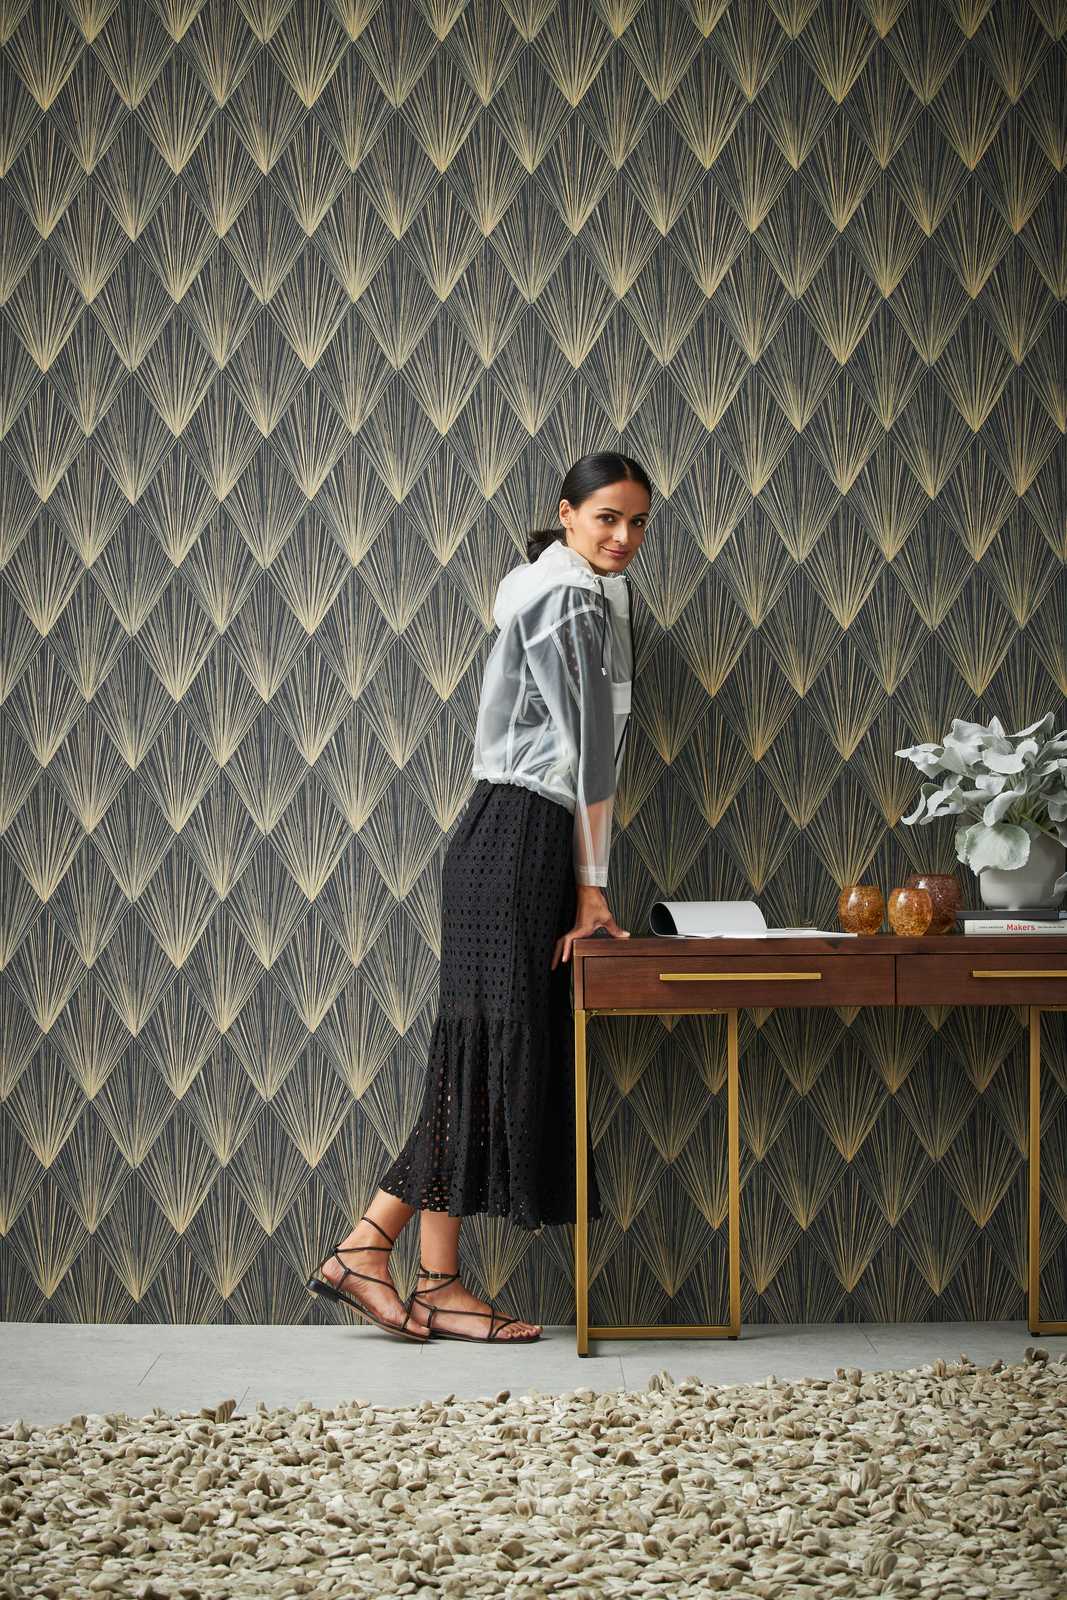             Black non-woven wallpaper with metallic pattern - beige, metallic, black
        